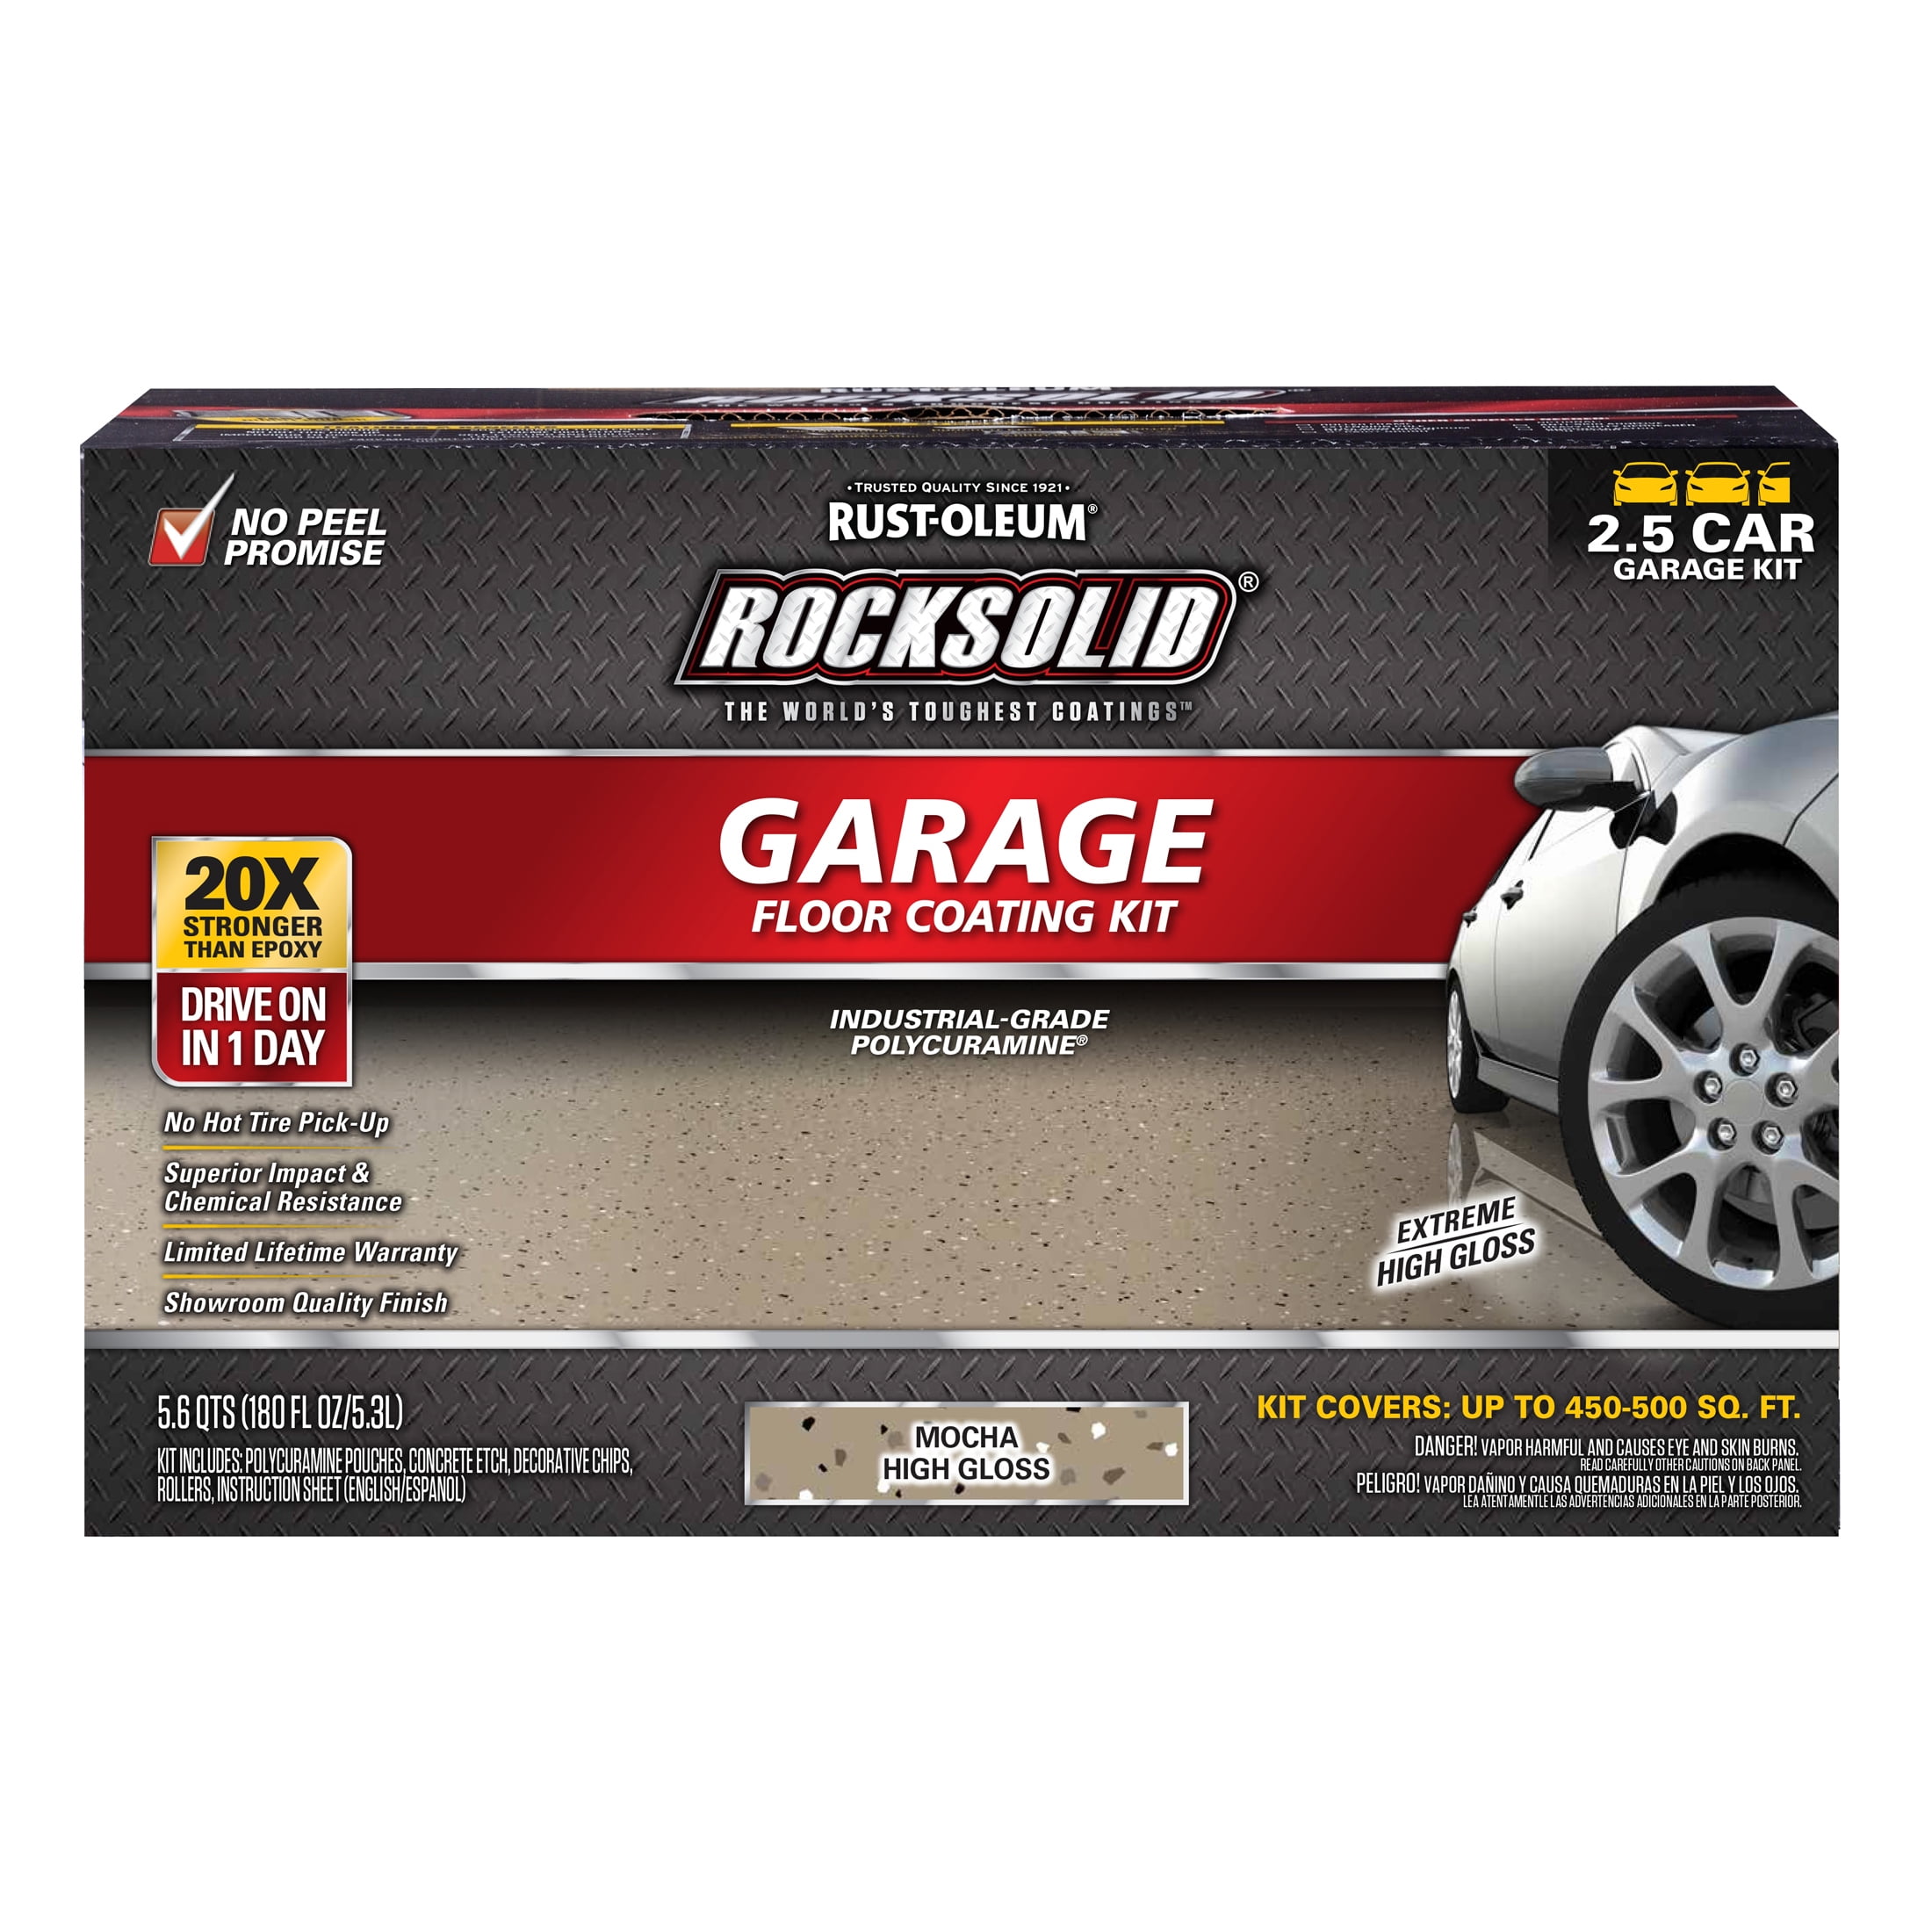 Mocha, Rust-Oleum RockSolid Garage Floor Coating Kit-293517, High Gloss  2.5-Car,180 oz Kit, 1 Pack